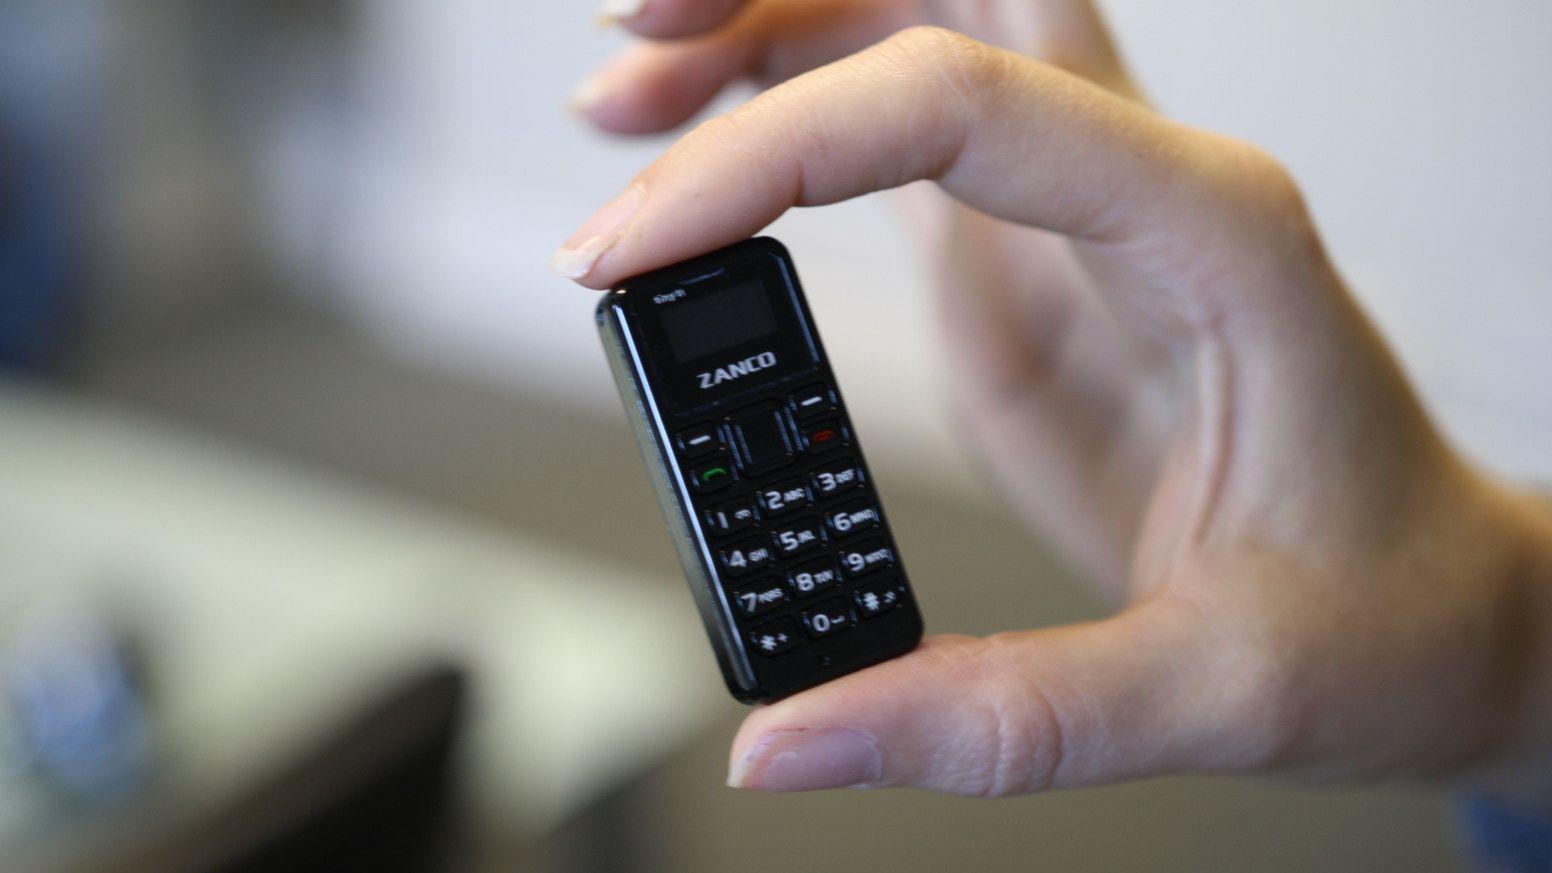 The World's Smallest Phone The Zanco tiny t1